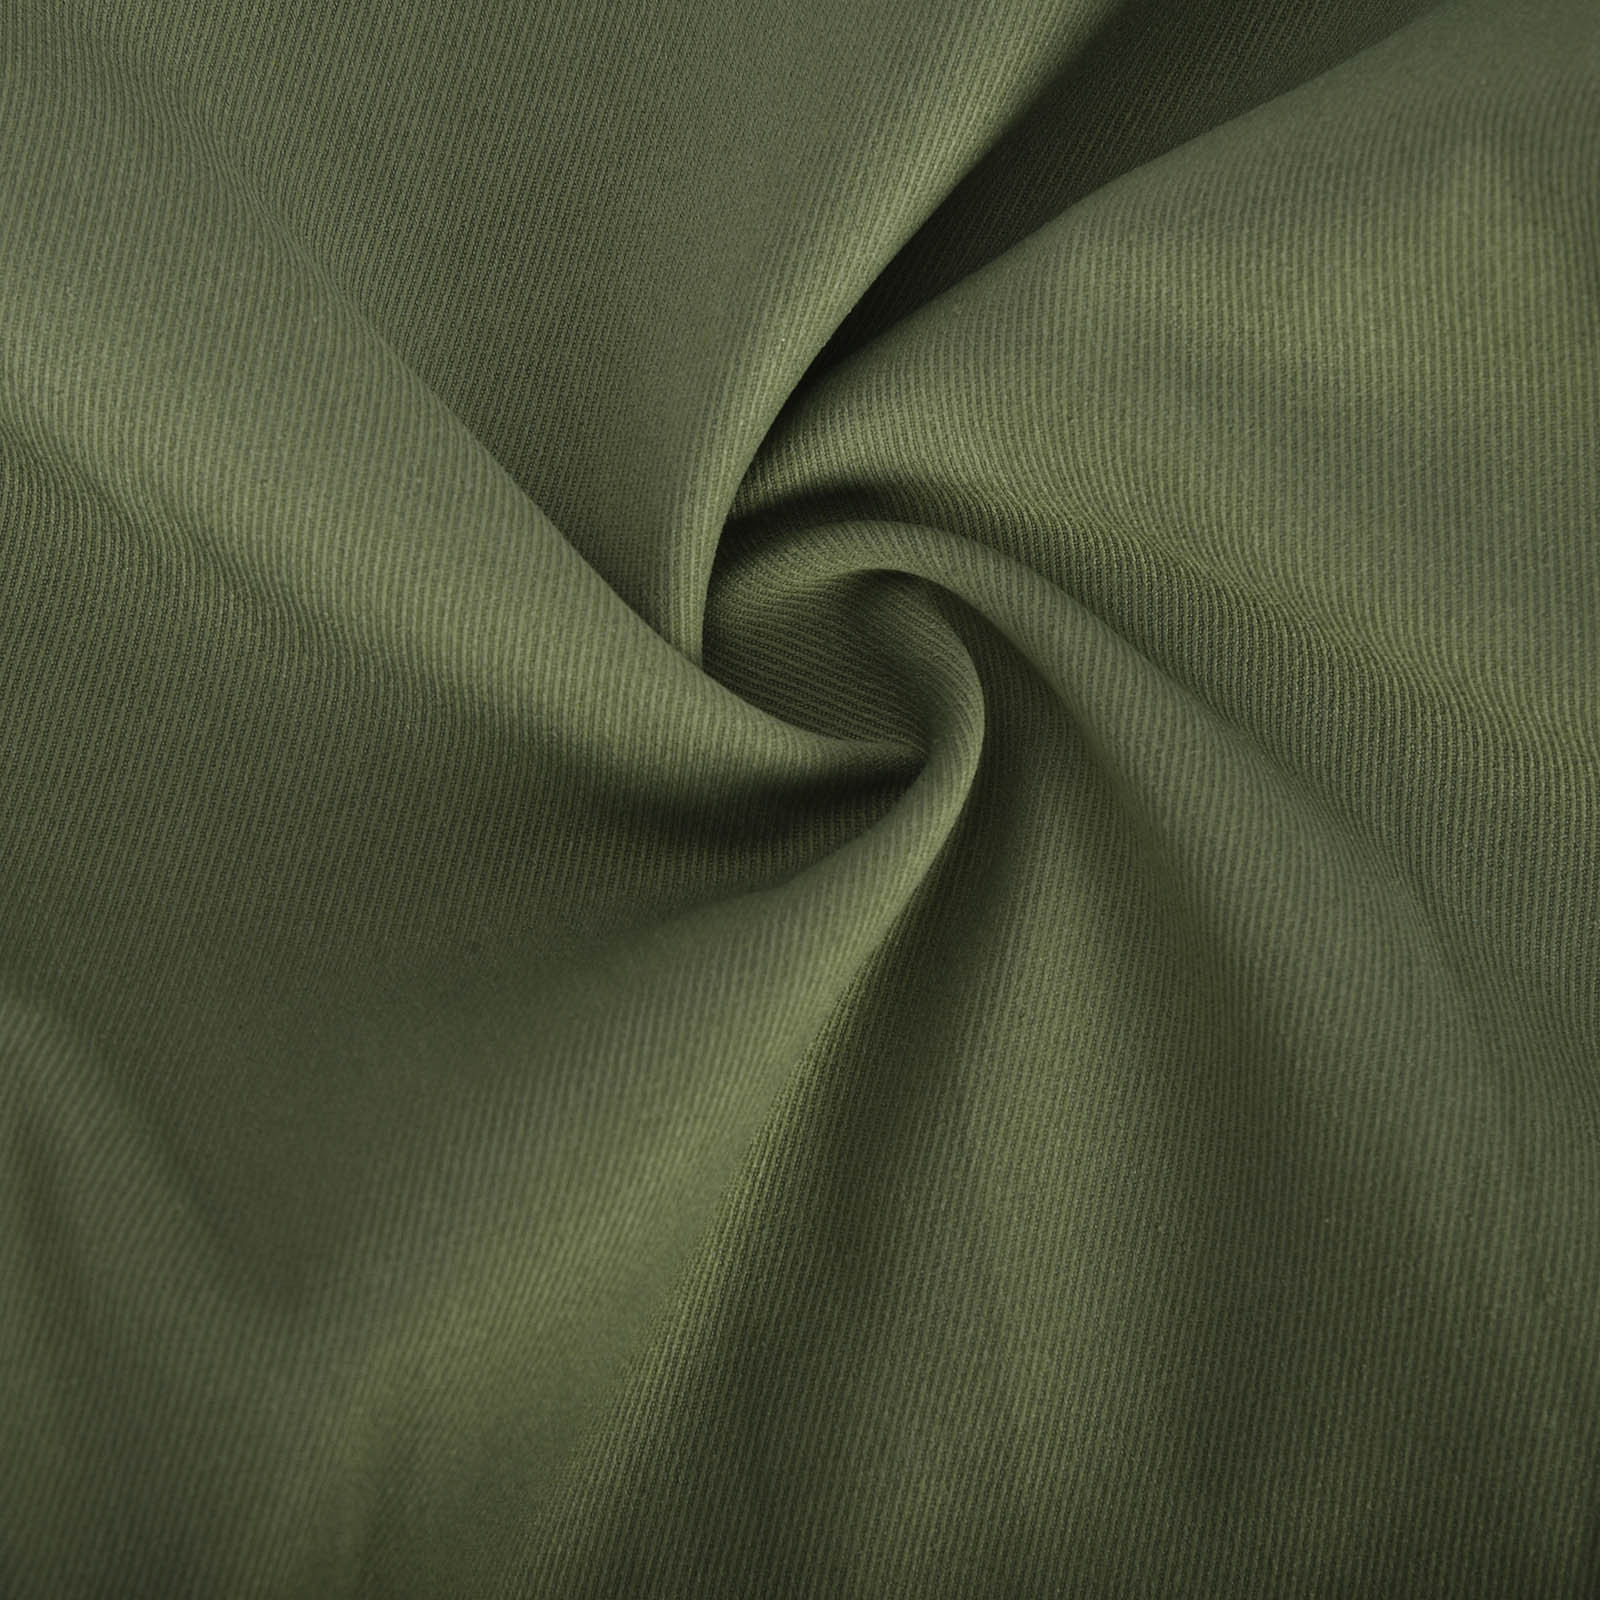 Tdoqot Chinos Pants Men- Casual Drawstring Comftable Elastic Waist Slim Cotton Mens Pants Army Green - image 4 of 6